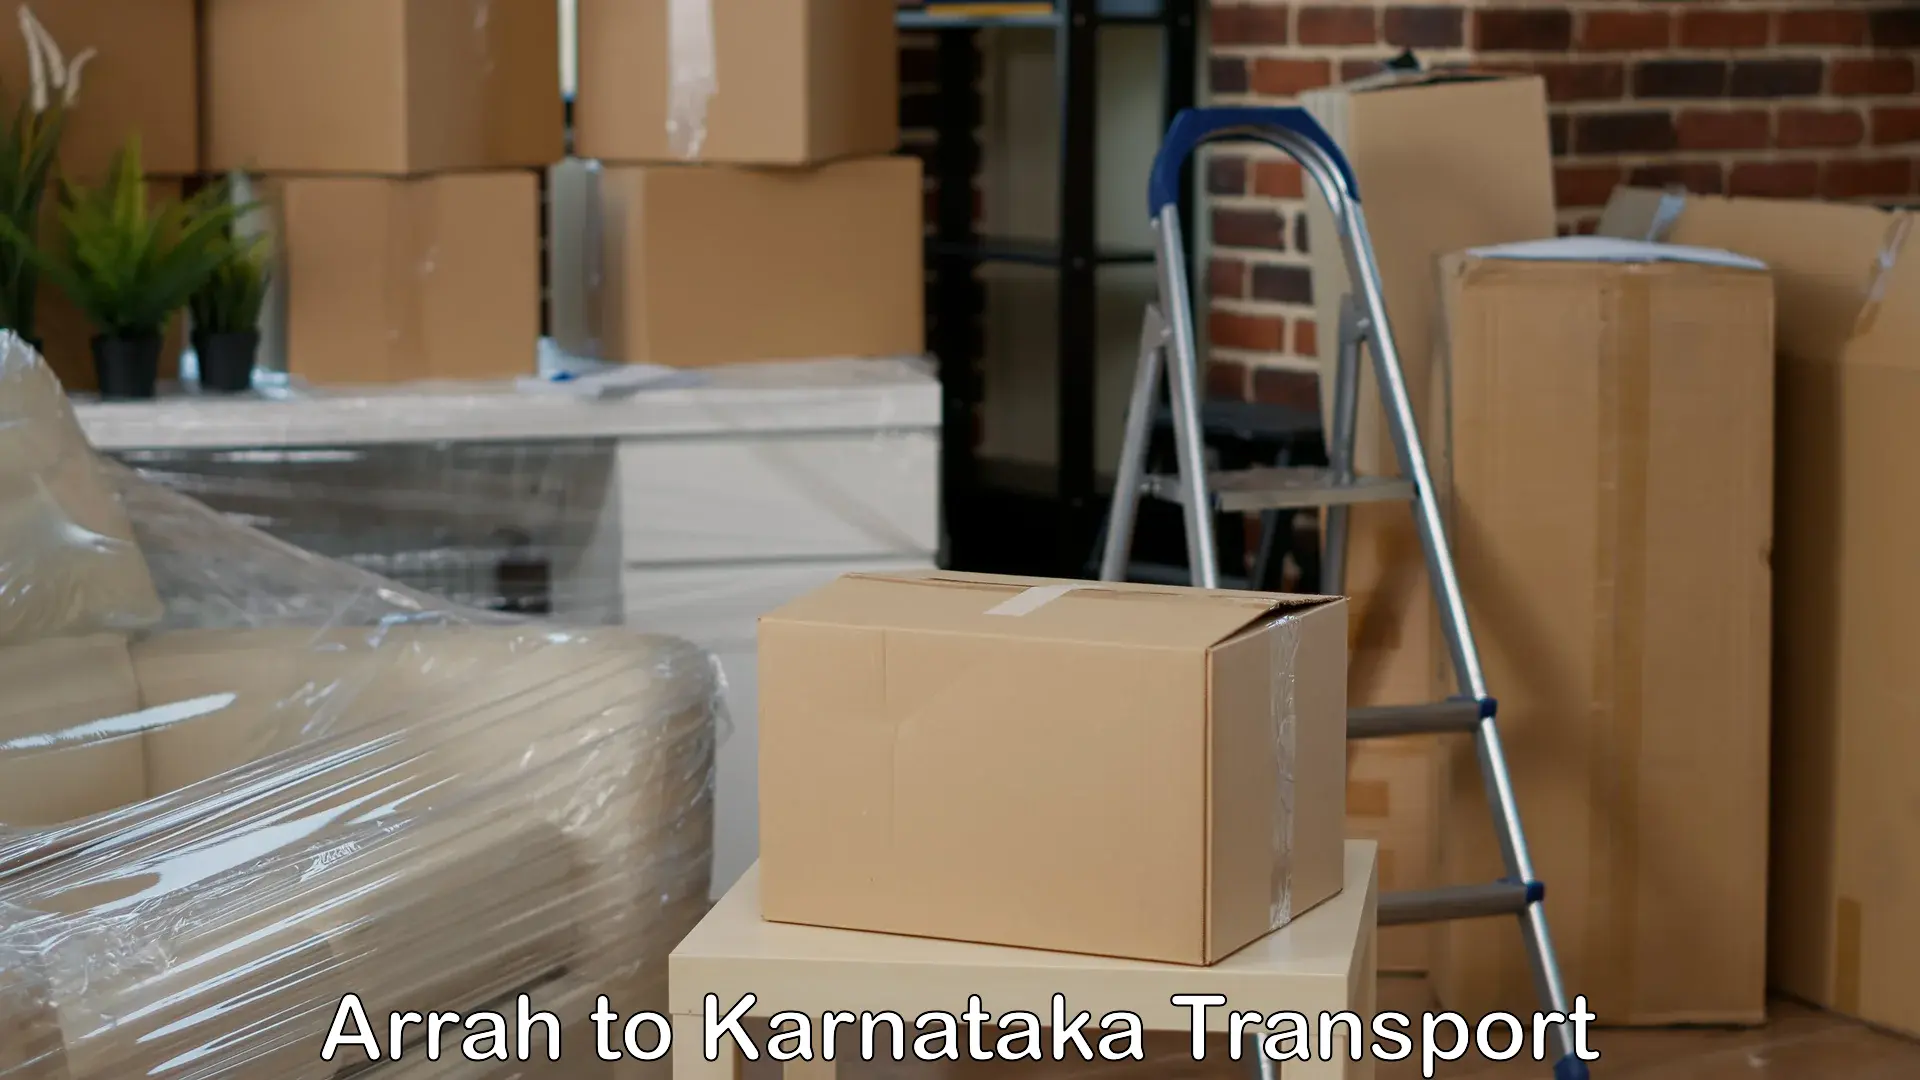 Delivery service Arrah to Bengaluru